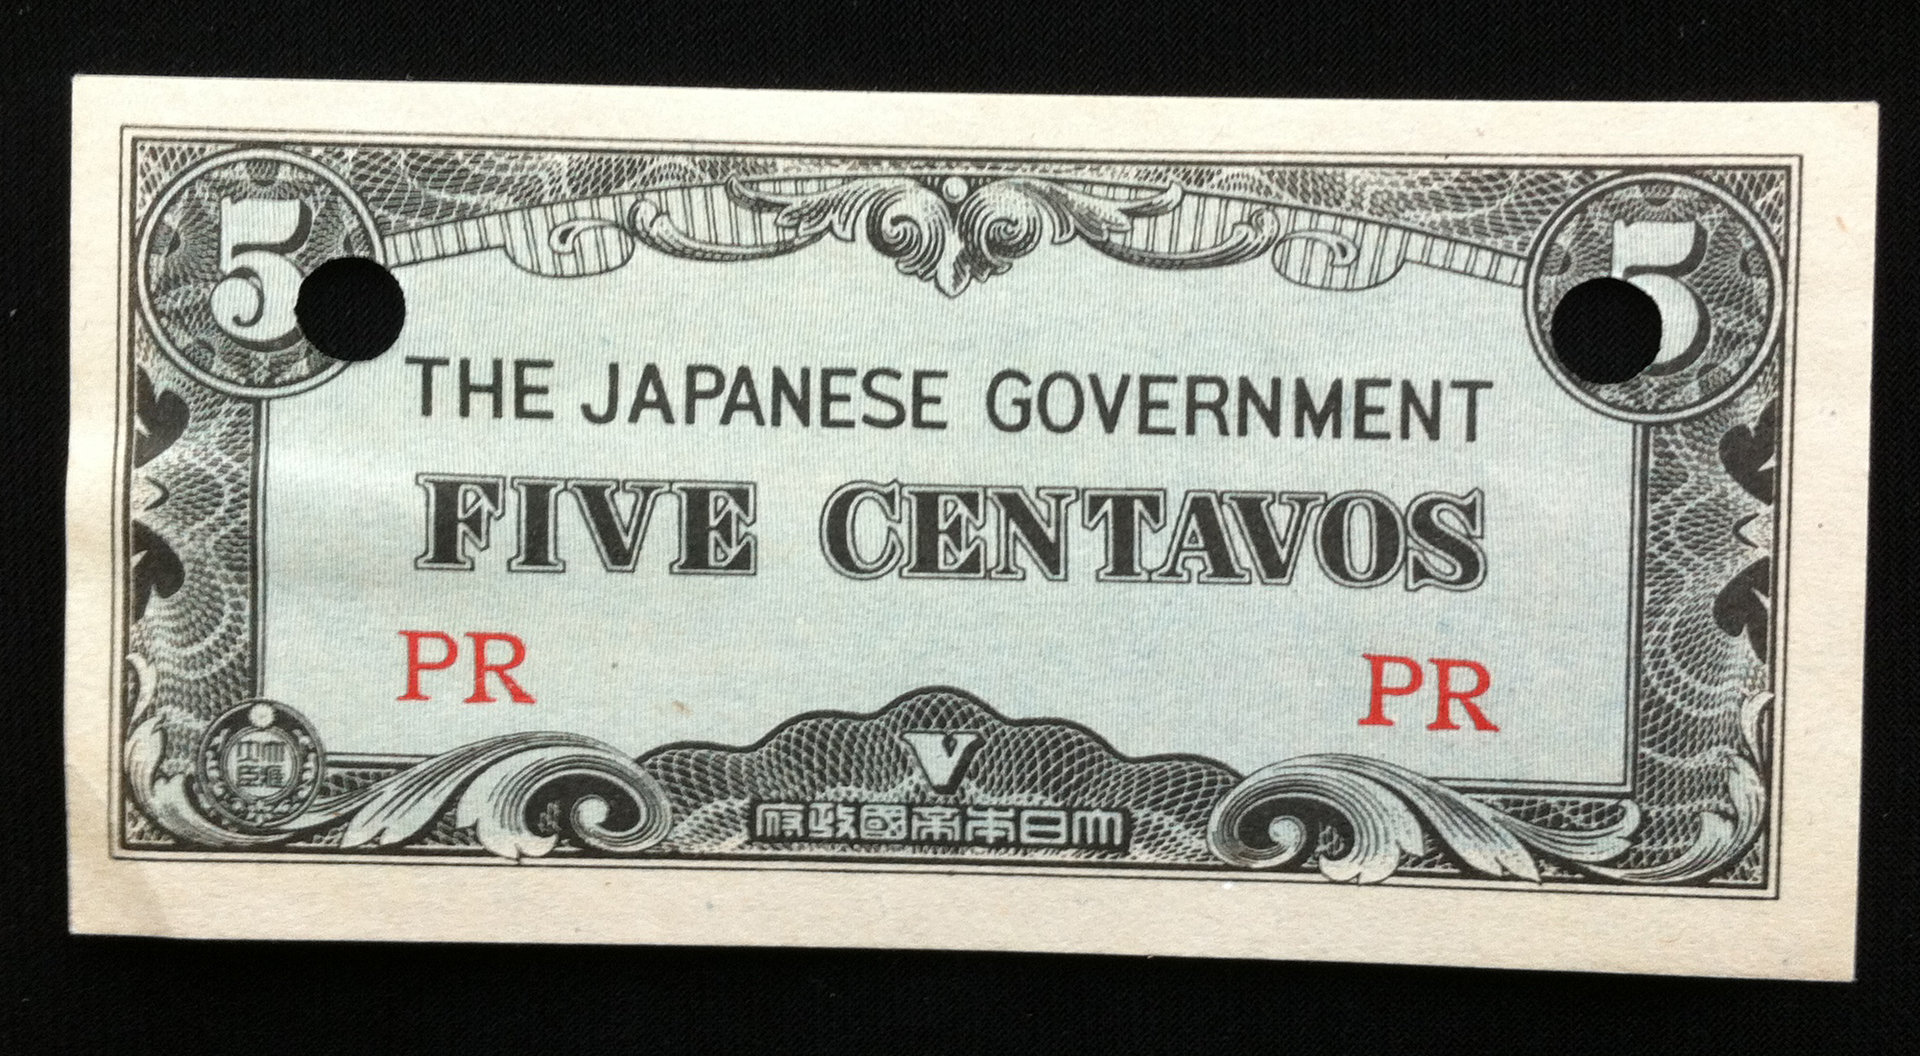 Japanese-Govt-Five-Centavos-Ob_02.jpg